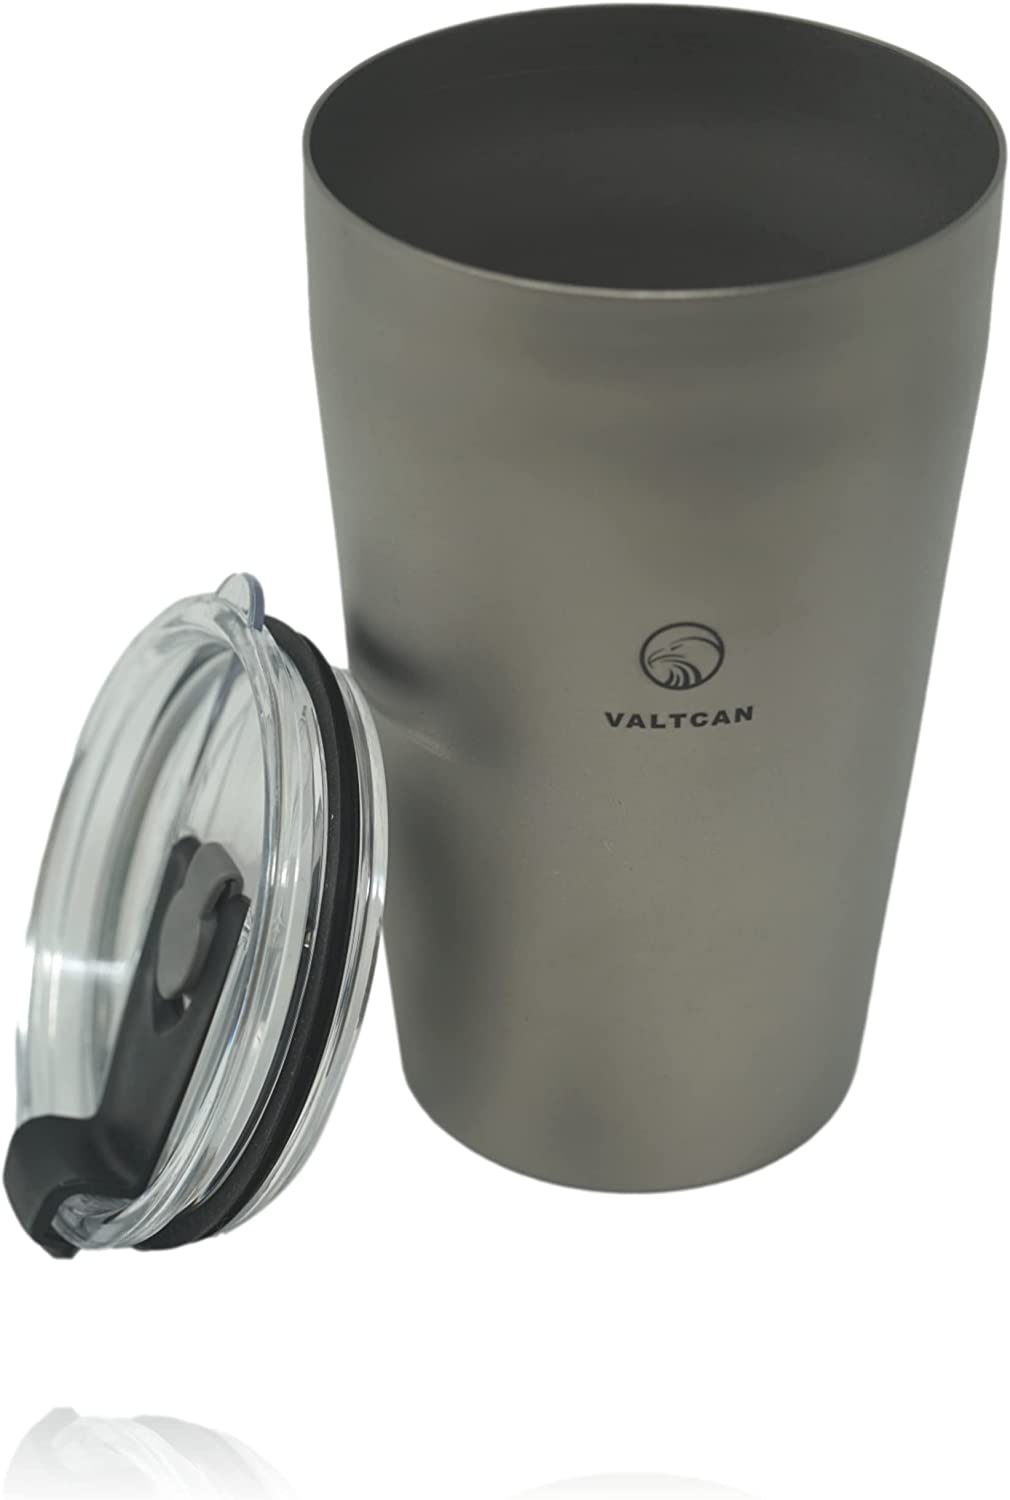 Valtcan Titanium Beer Cup Mug 500ml Double Wall with Lid 16.9 fl oz